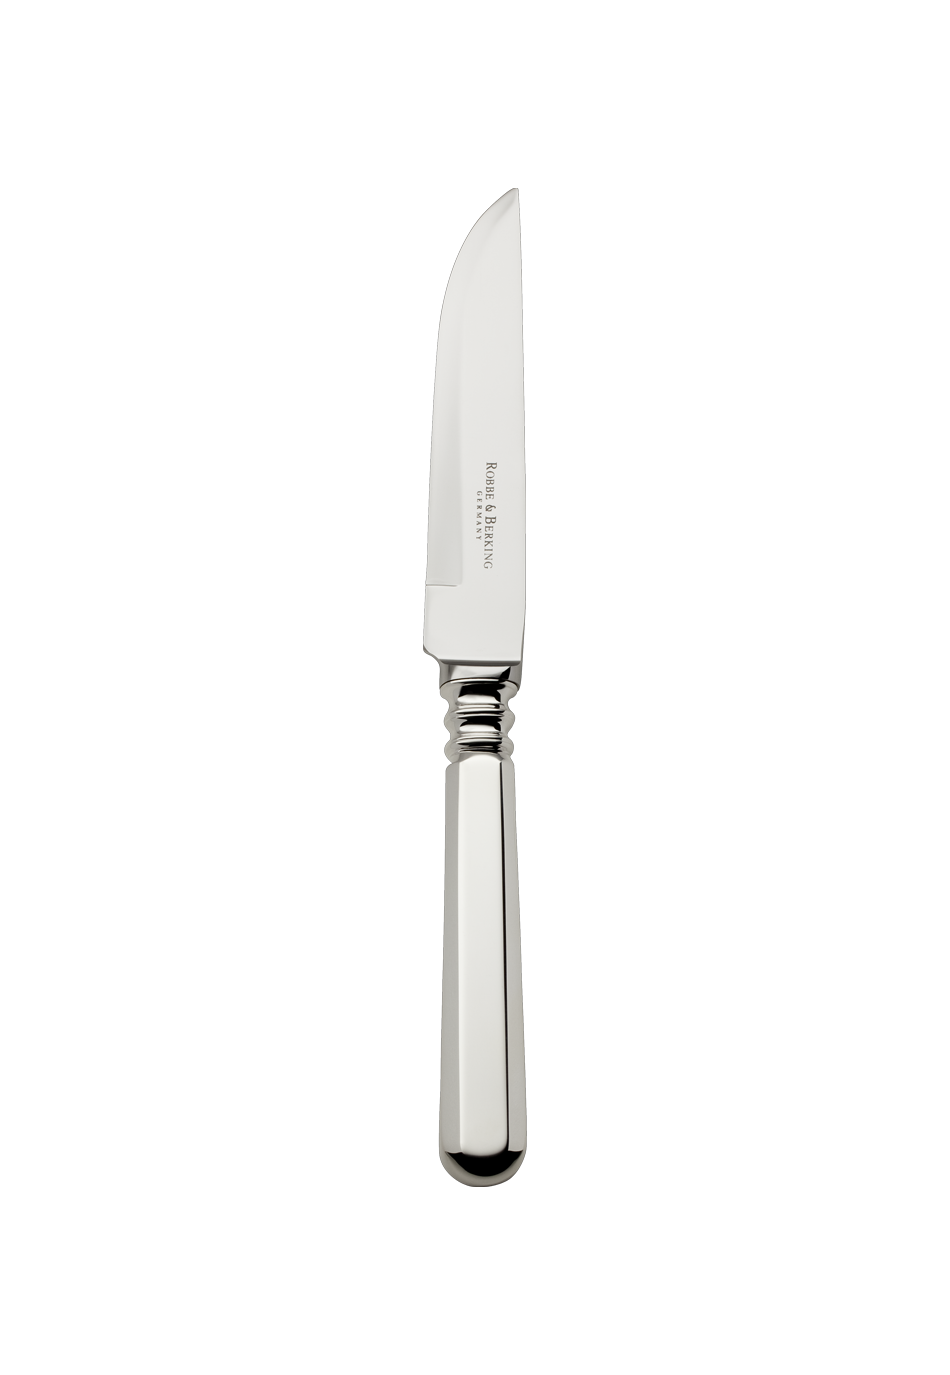 Alt-Spaten Steak Knife (150g massive silverplated)